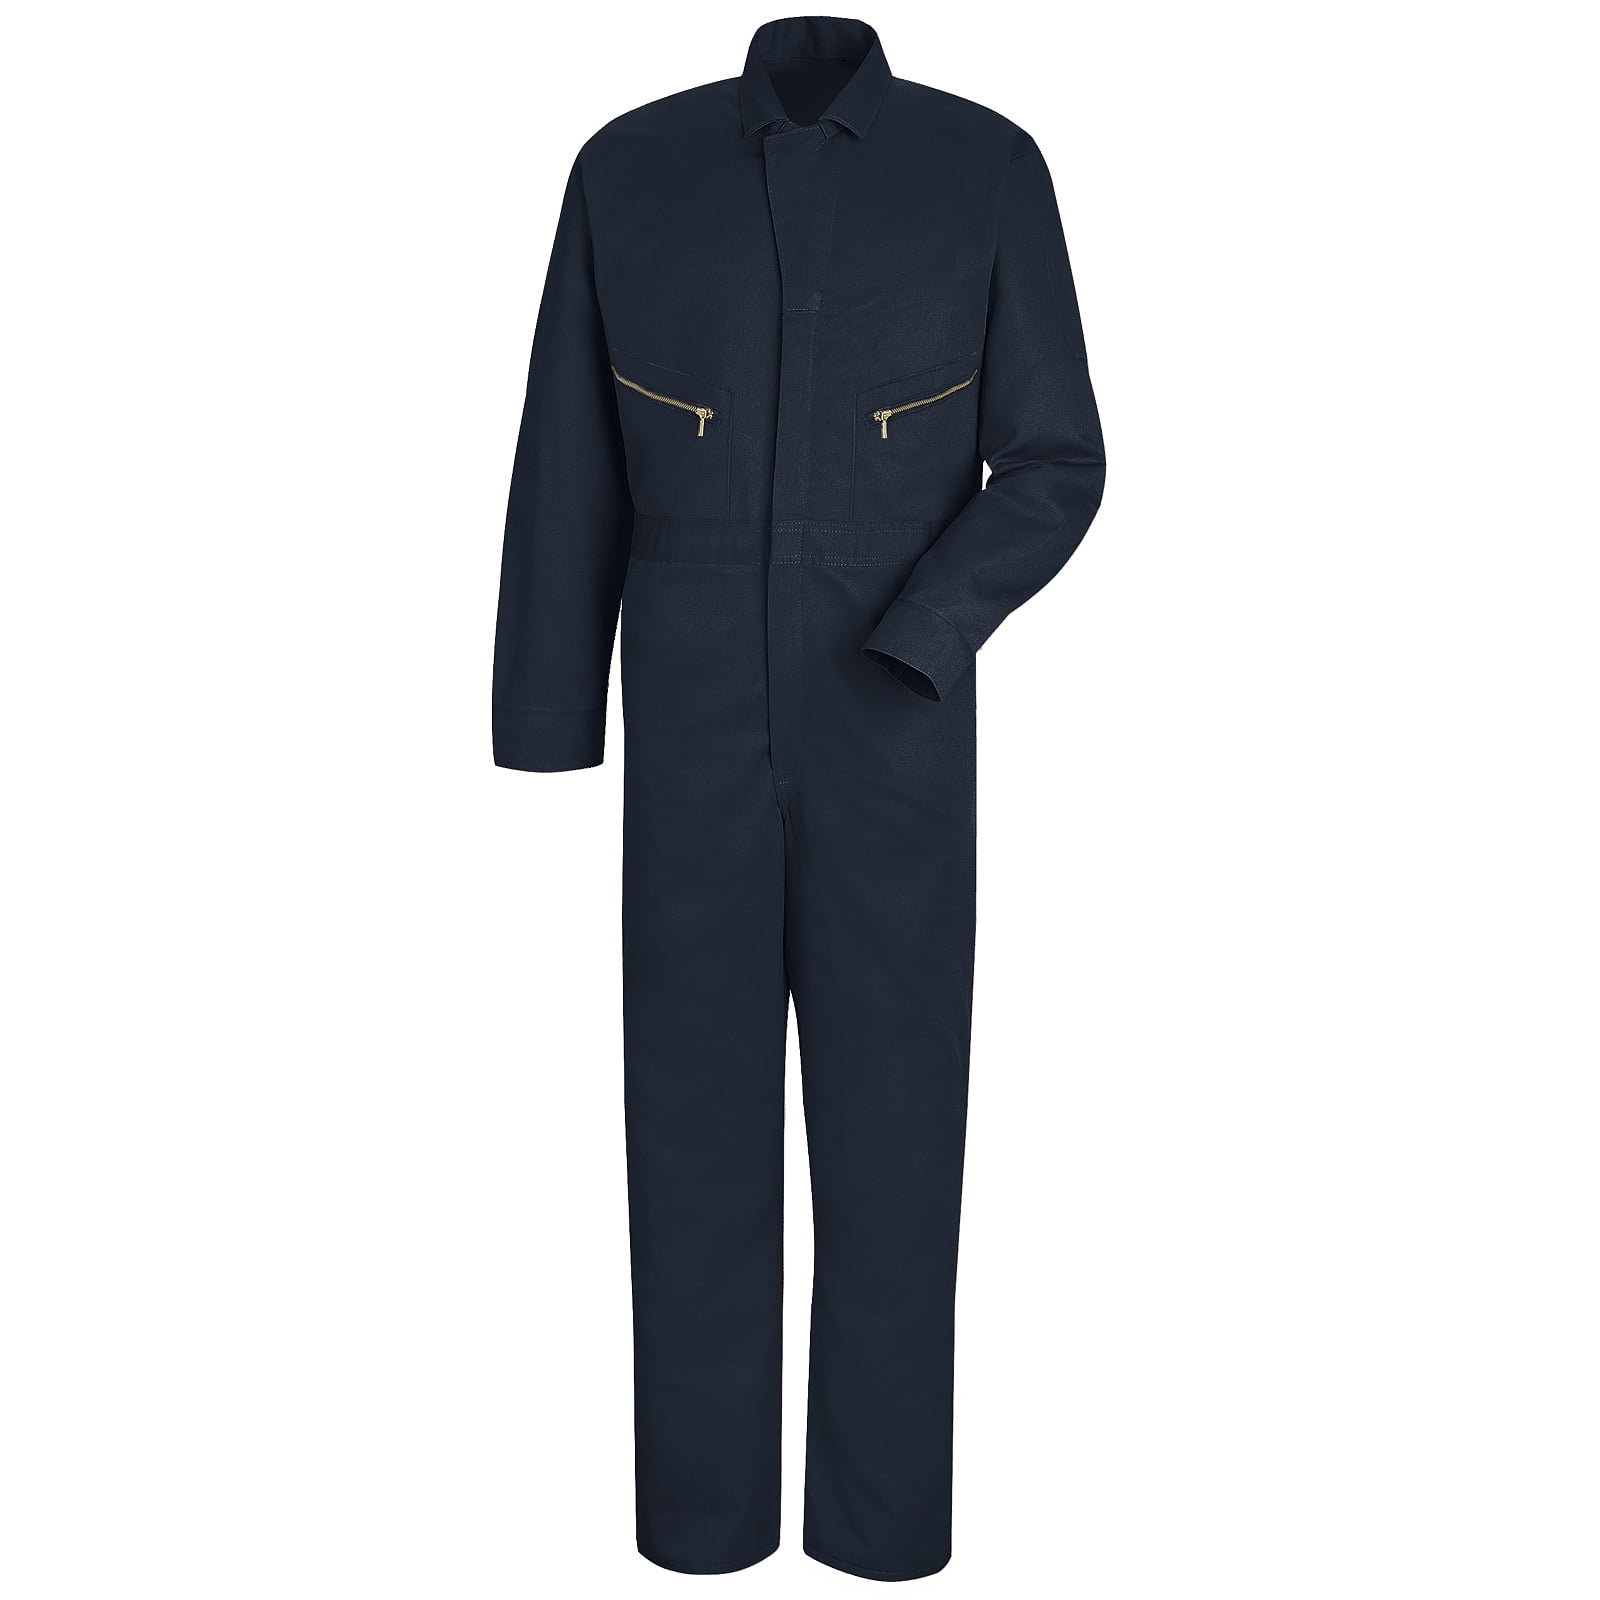 TOPTIE Custom Chef Coat Short Sleeve Chef Jacket Heat Transfer Embroidered Personalized Uniform 